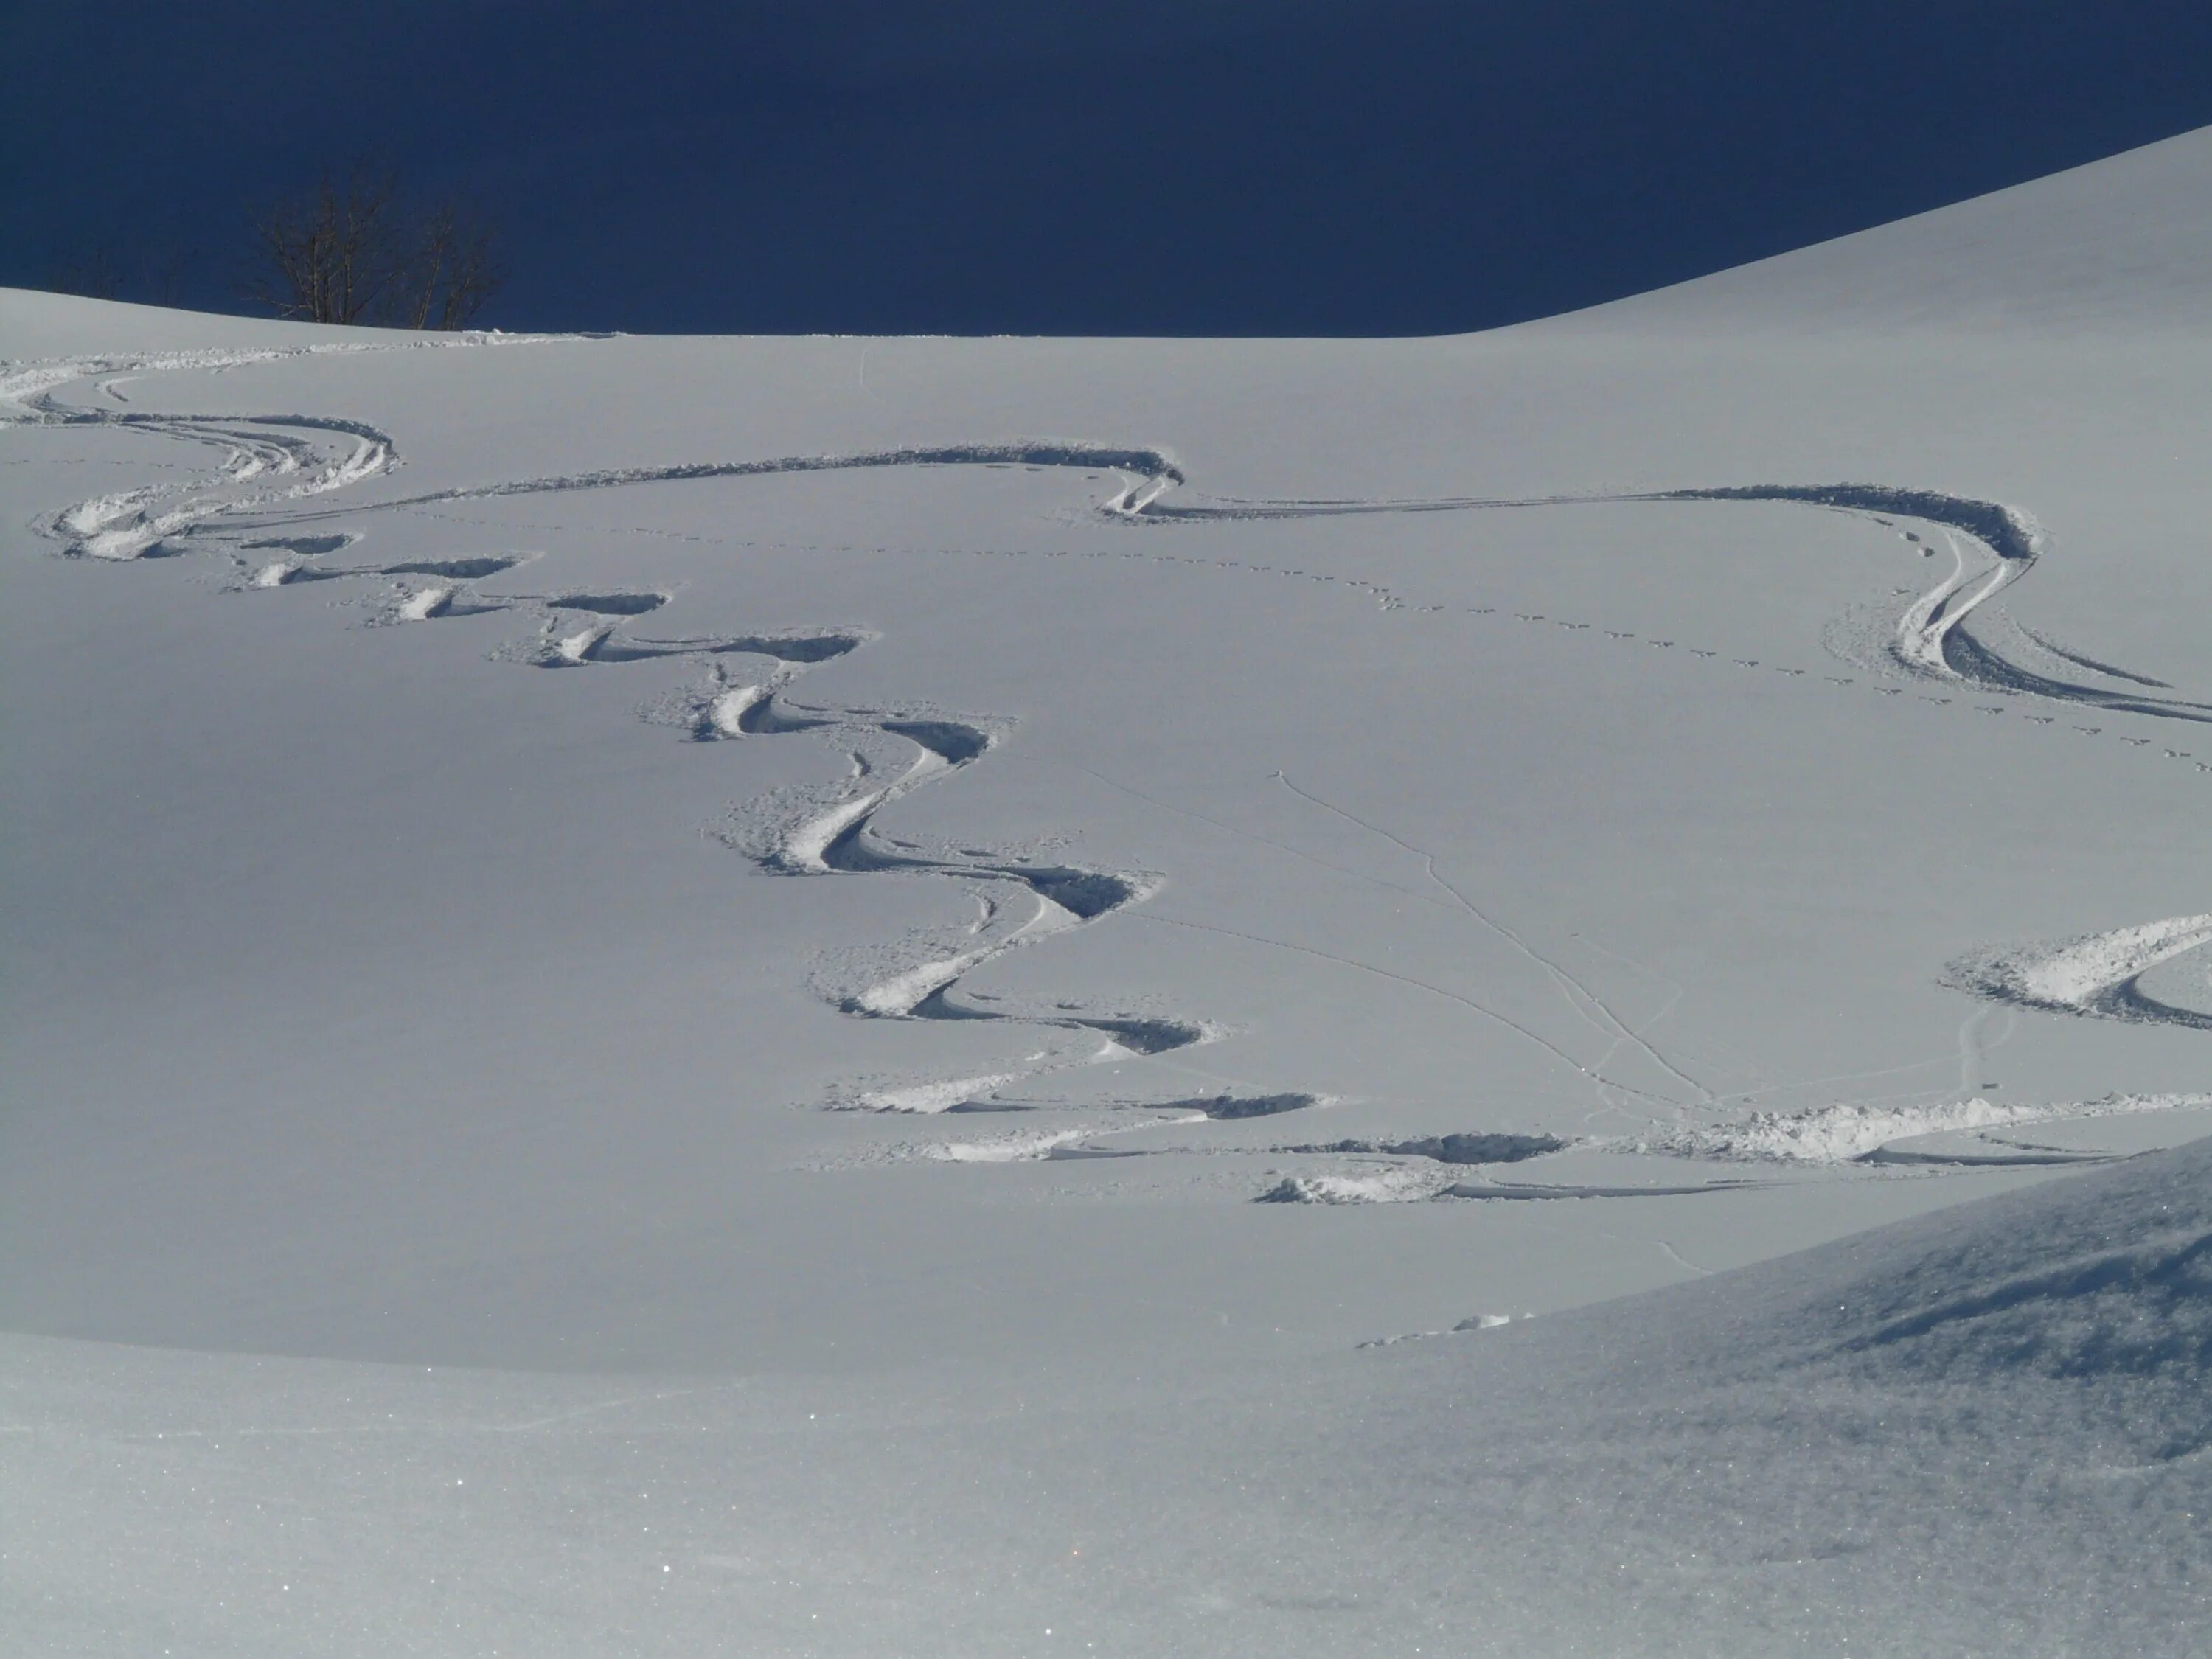 Ski tracks. Лыжные следы на снегу. Следы от лыж на снегу. Лыжный след. След горных лыж.